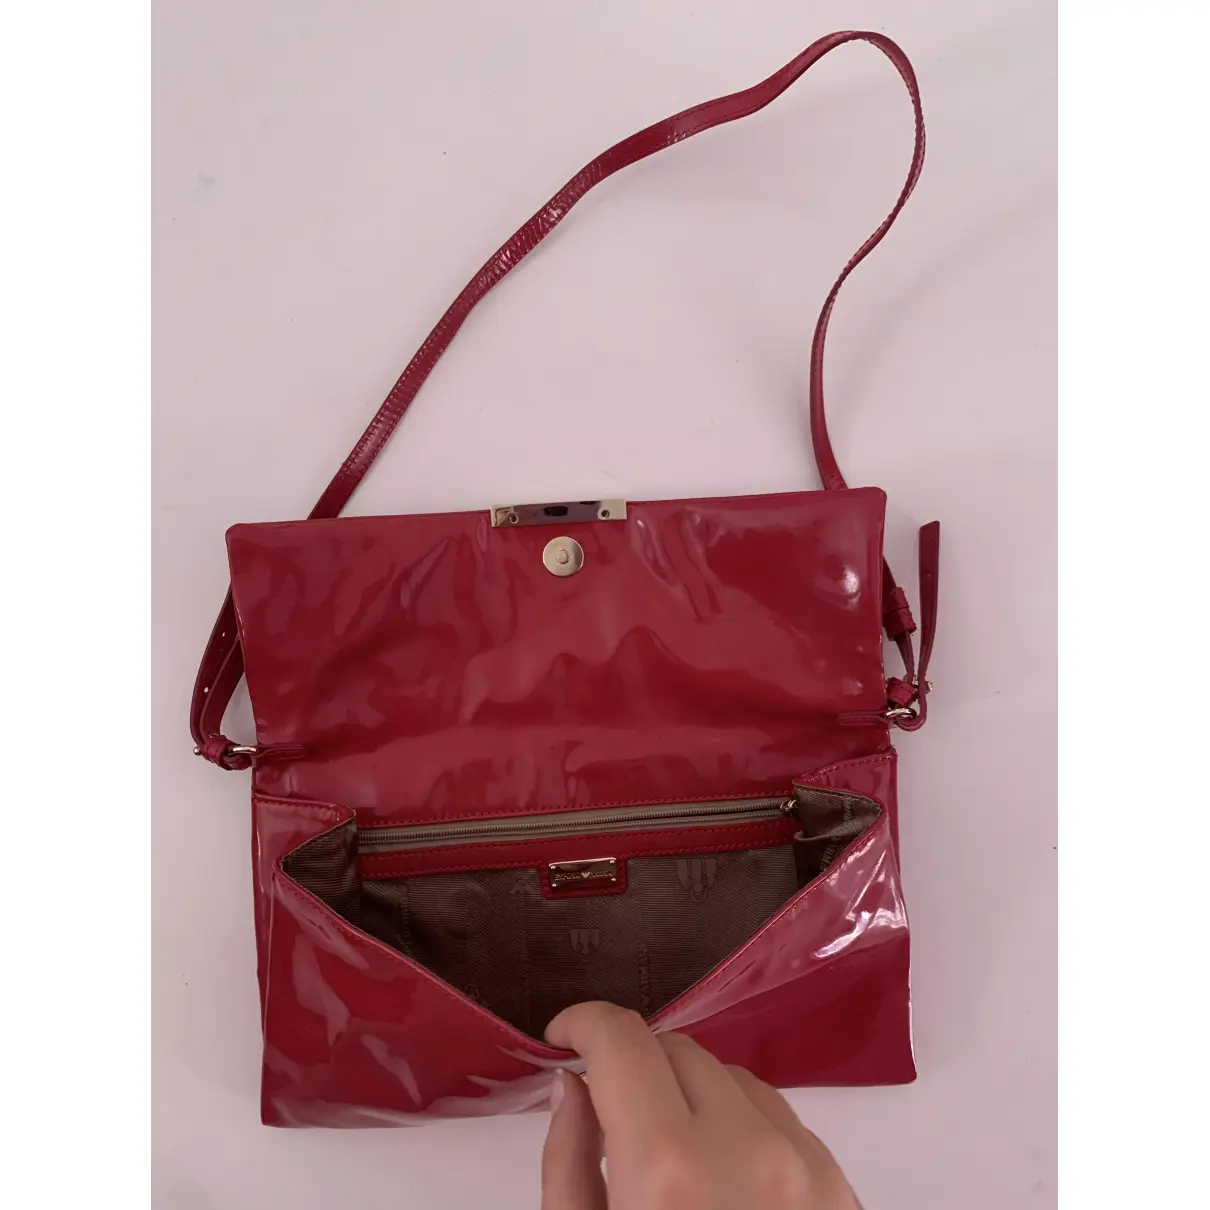 Patent leather clutch bag Emporio Armani